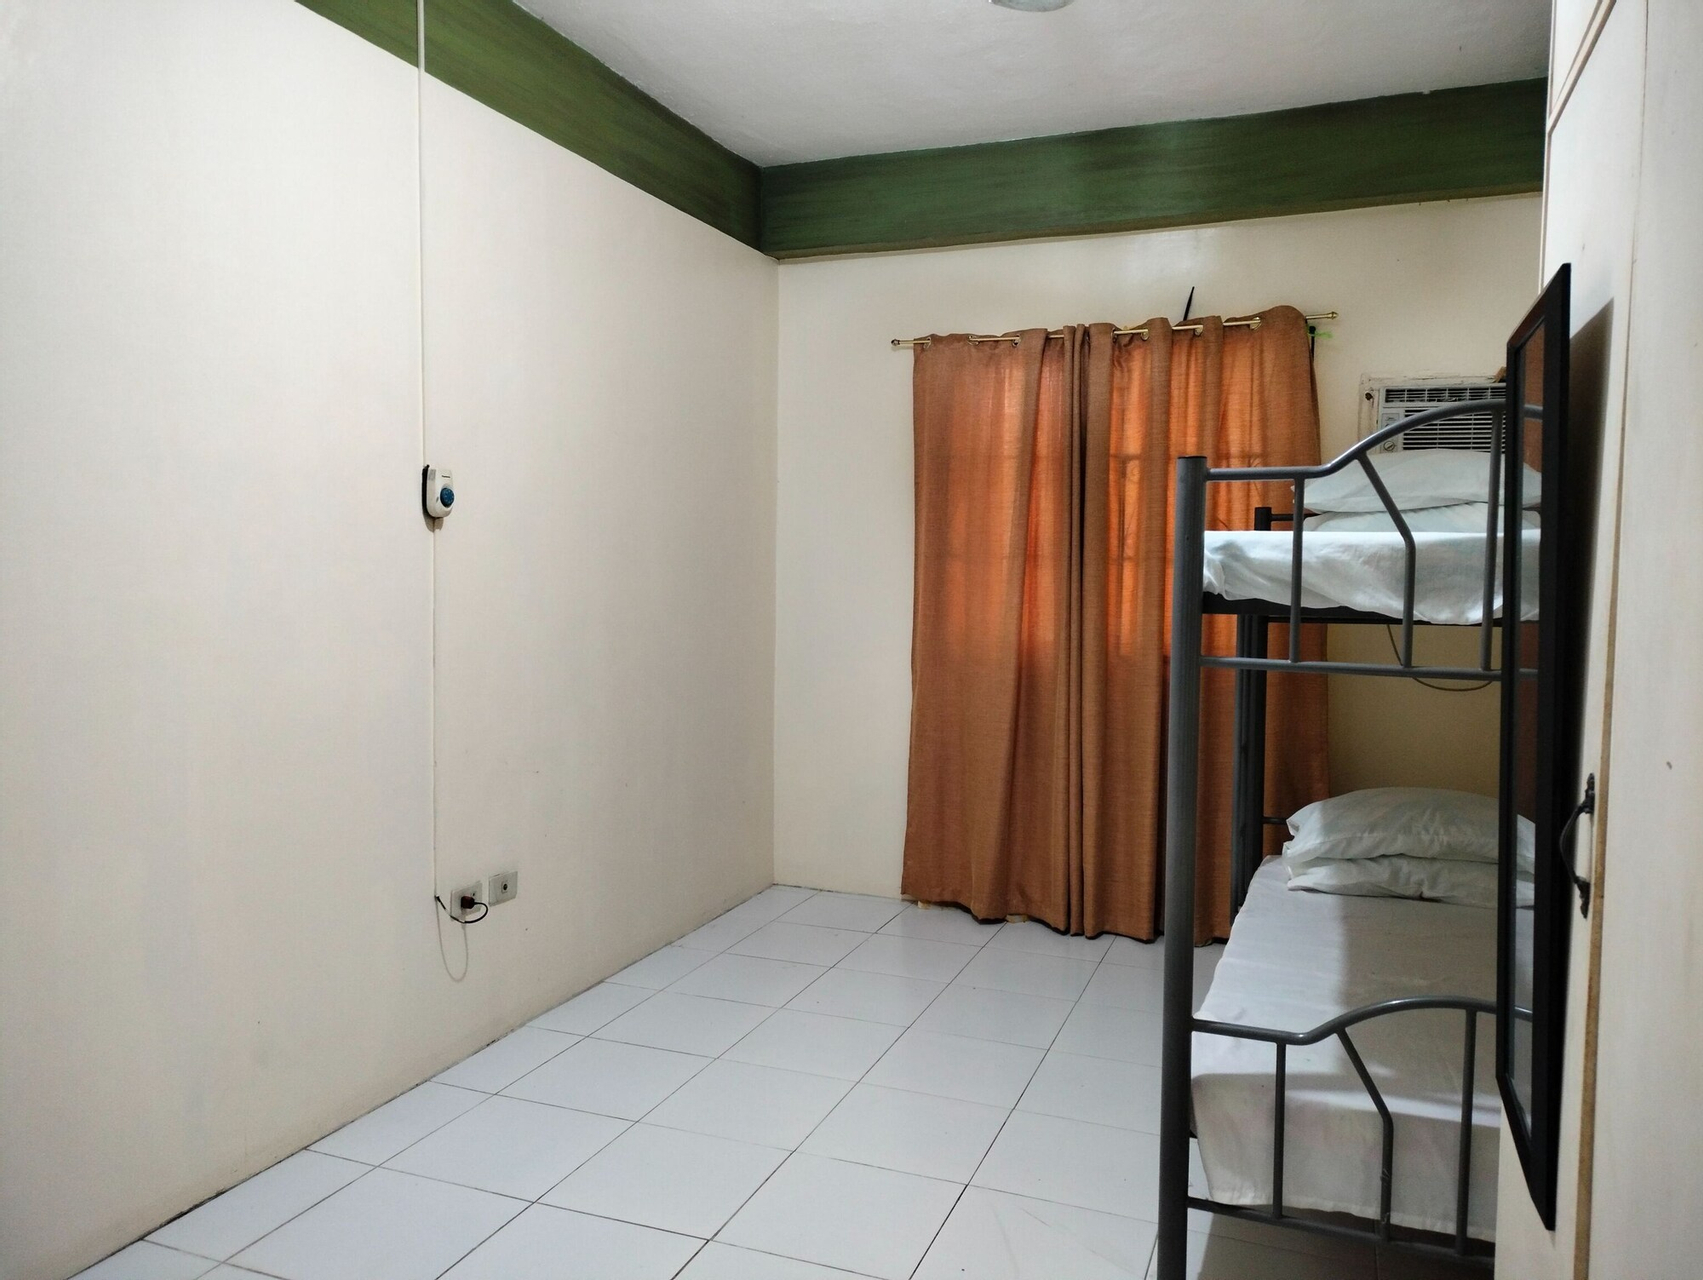 Bedroom 3, OYO 800 Ddd Habitat Dormtel Bacolod, Bacolod City